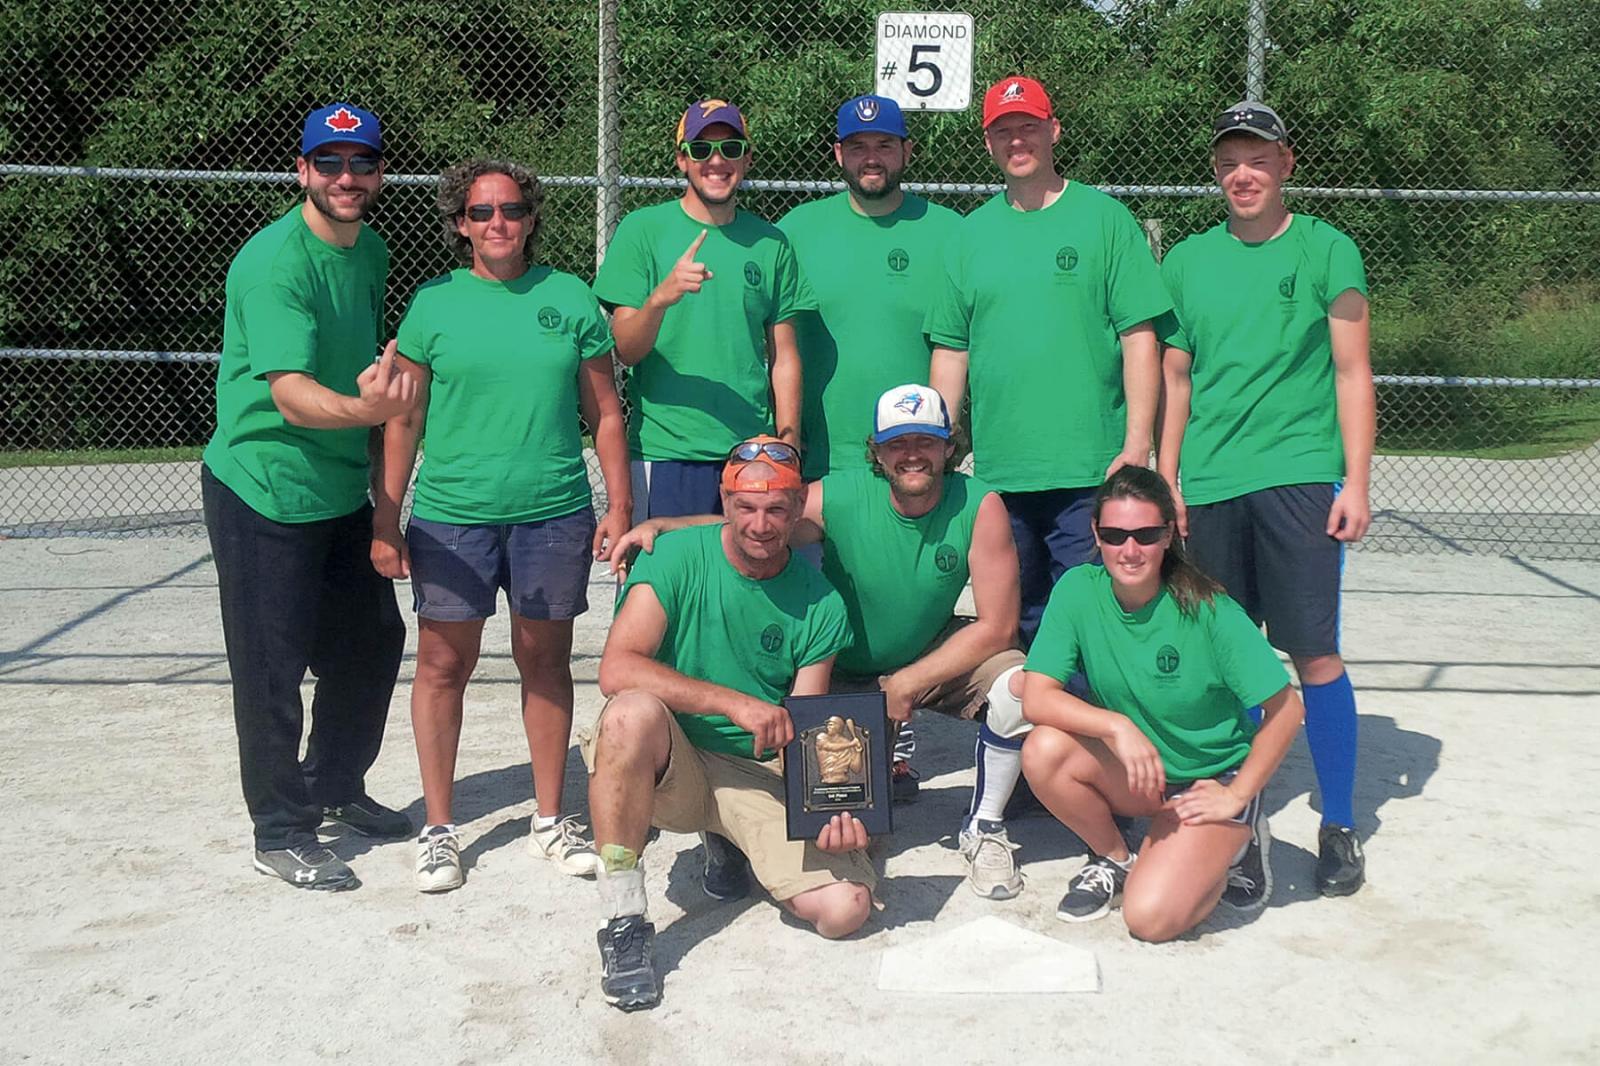 Sheridan Nurseries captured the 2014 Toronto Chapter baseball championship.